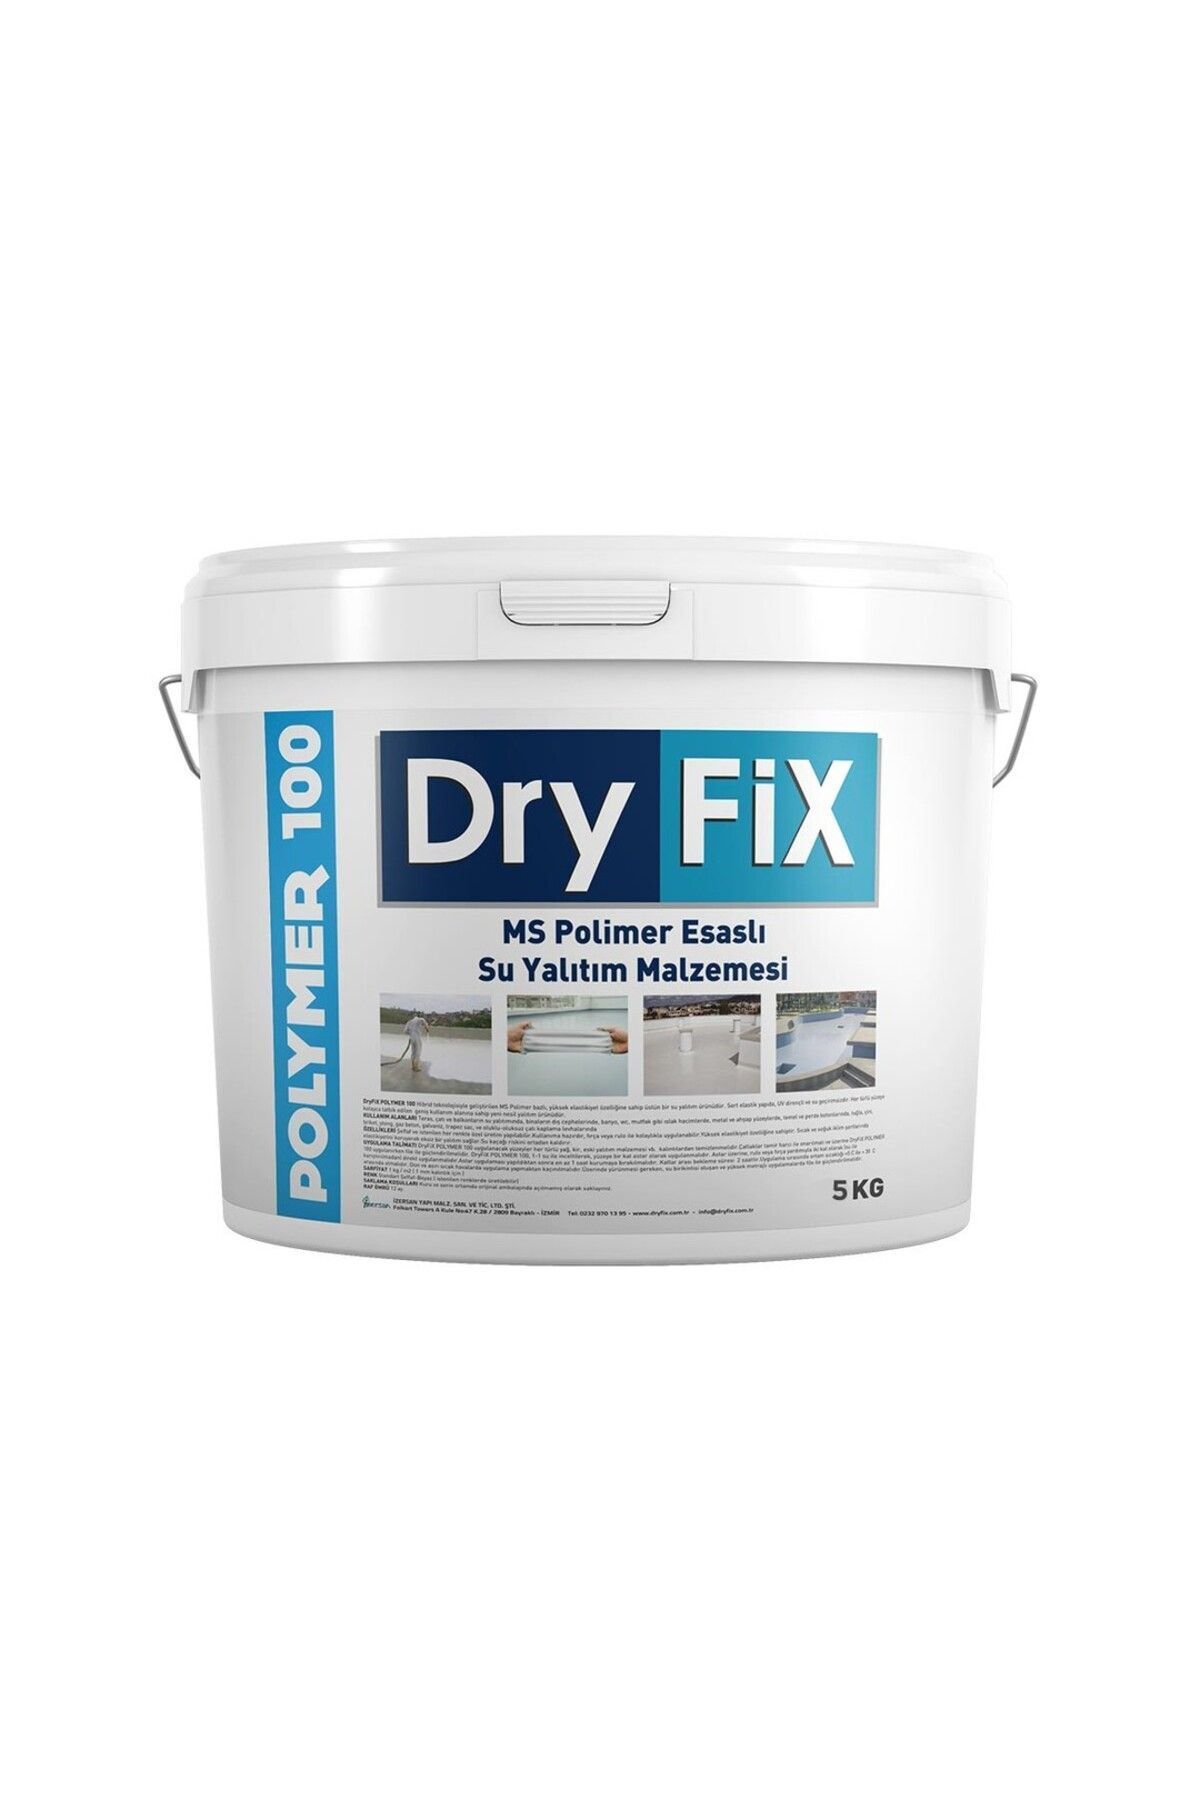 Dryfix Ms Polimer Esaslı Su Yalıtım Malzemesi | Polymer 100